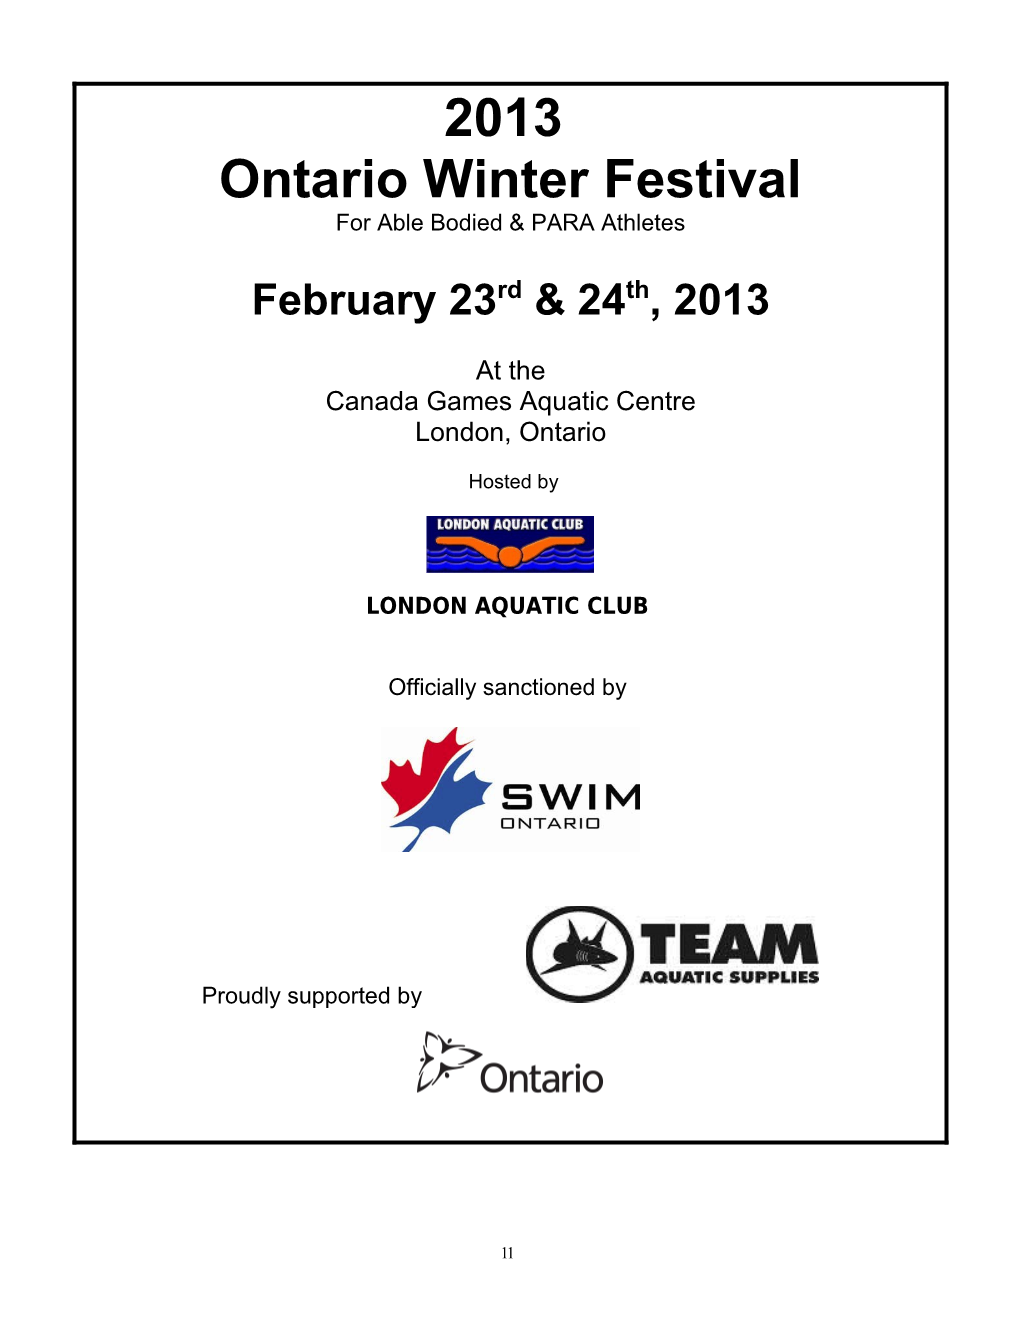 Ontario Winter Festival